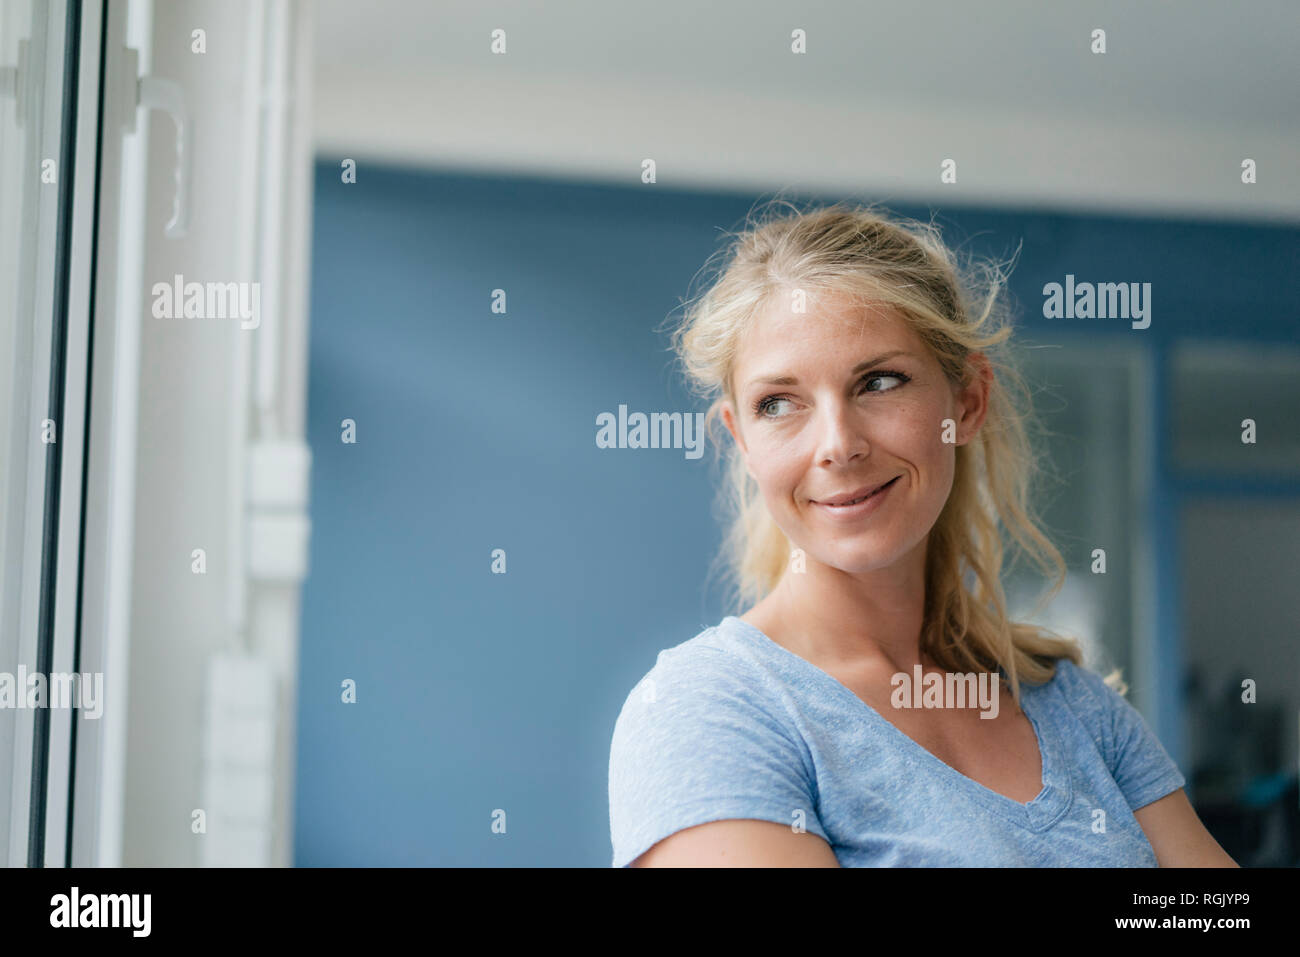 Portrait of smiling blonde woman looking sideways Banque D'Images